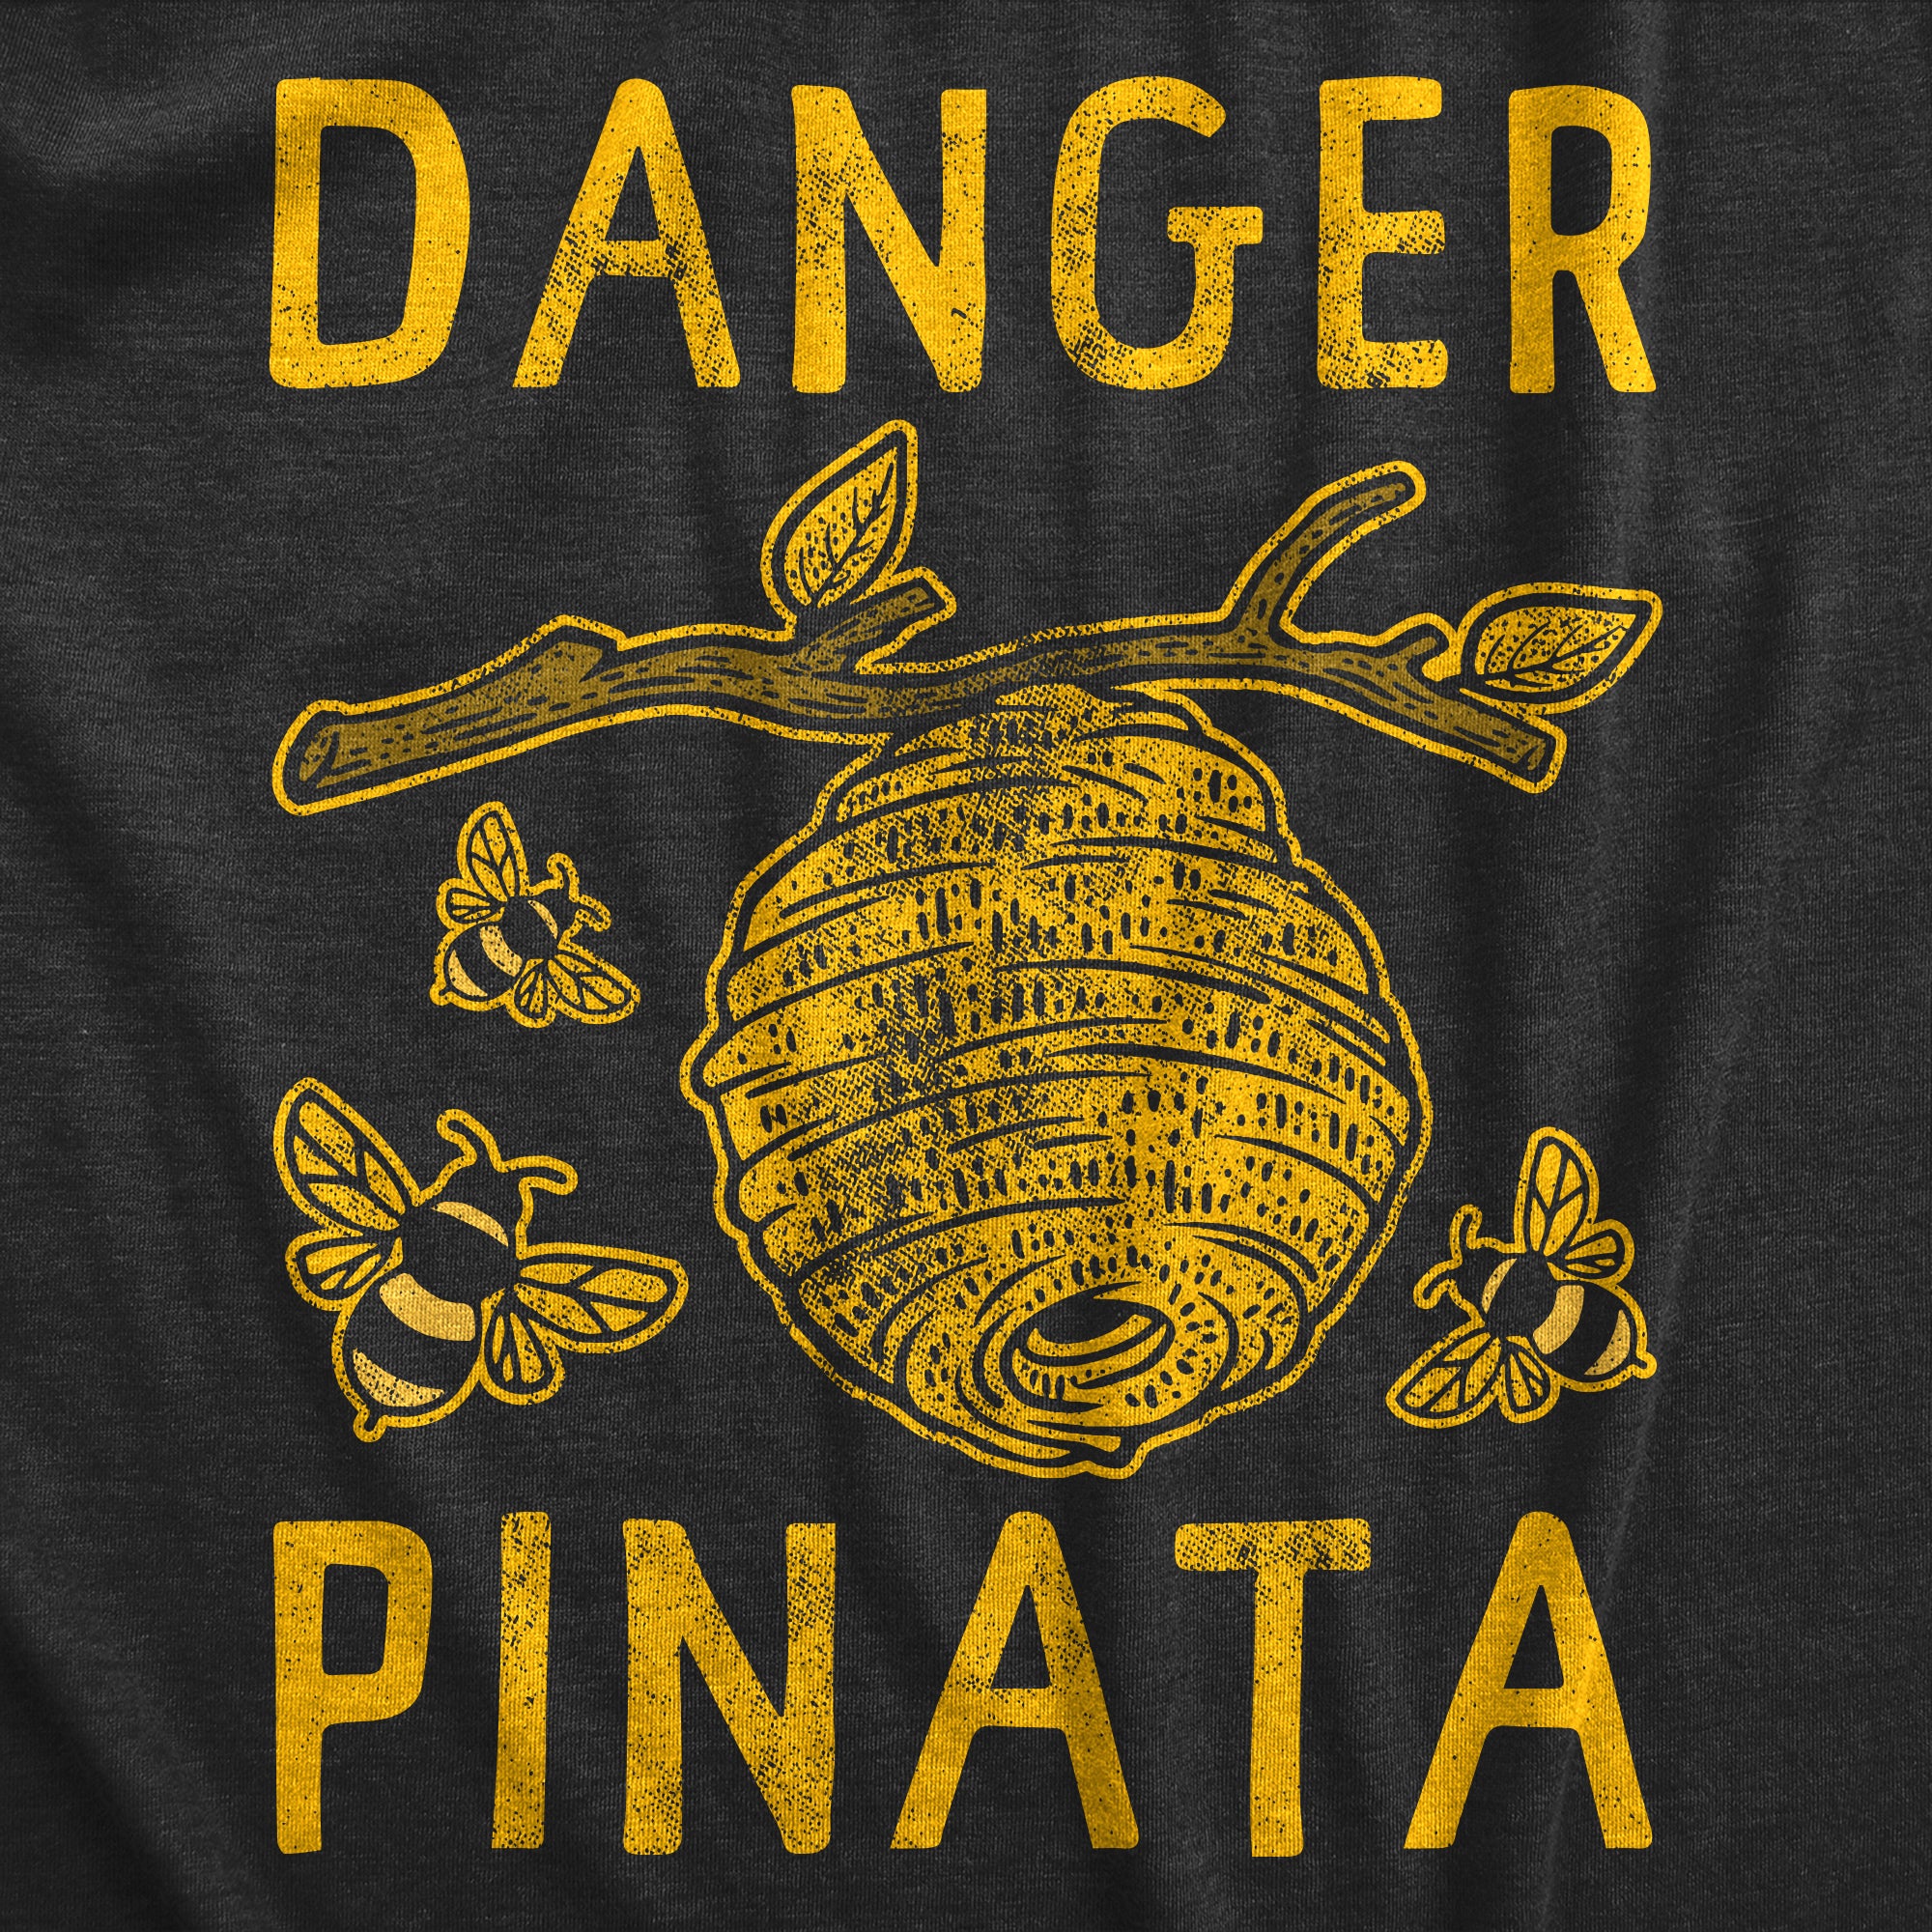 Funny Heather Black Danger Pinata Mens T Shirt Nerdy animal Tee